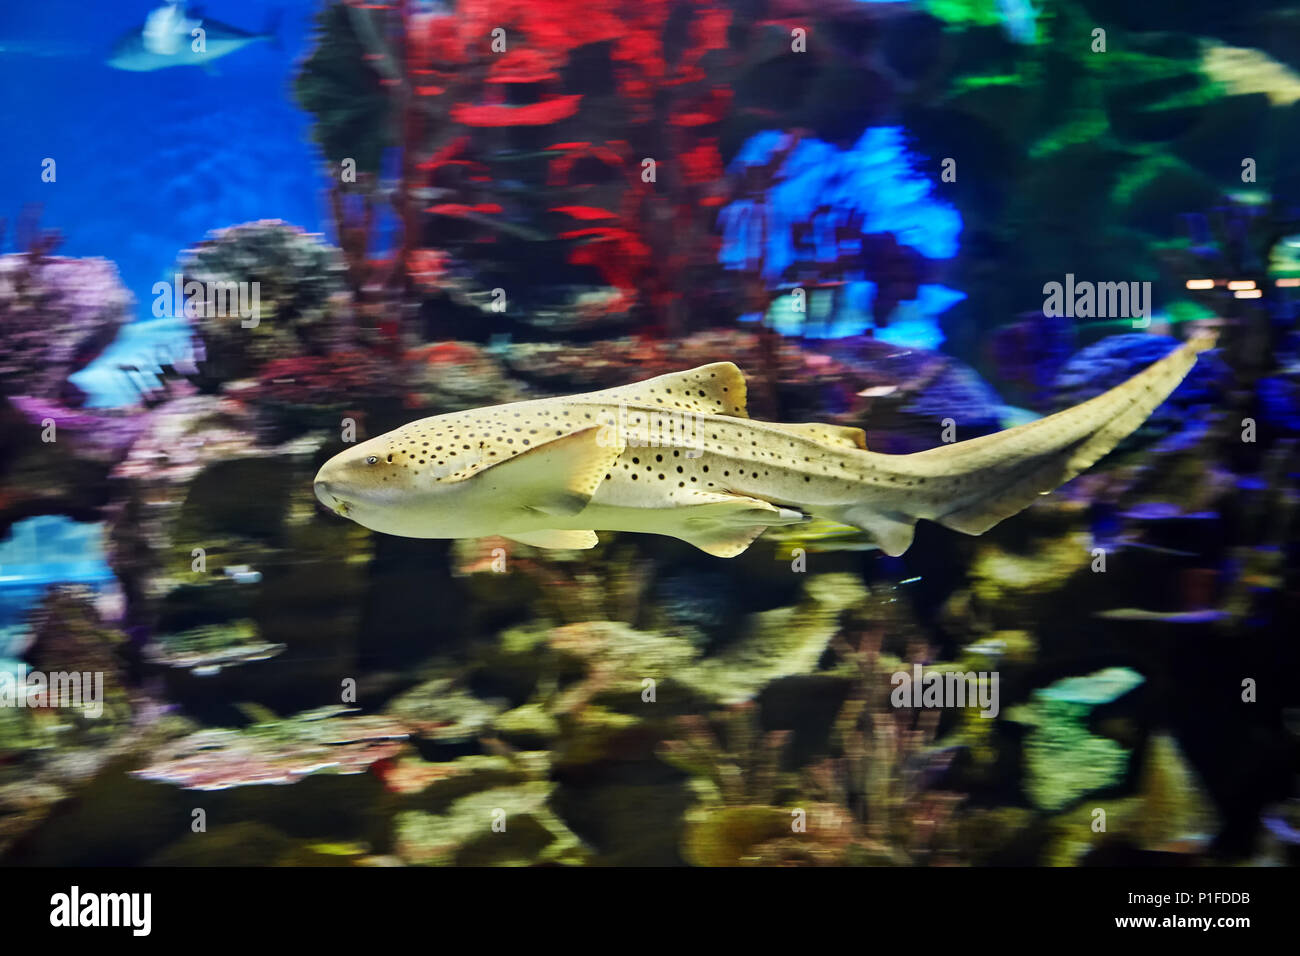 One leopard shark or triakis semifasciata in seawater aquarium, background with motion blur. Stock Photo